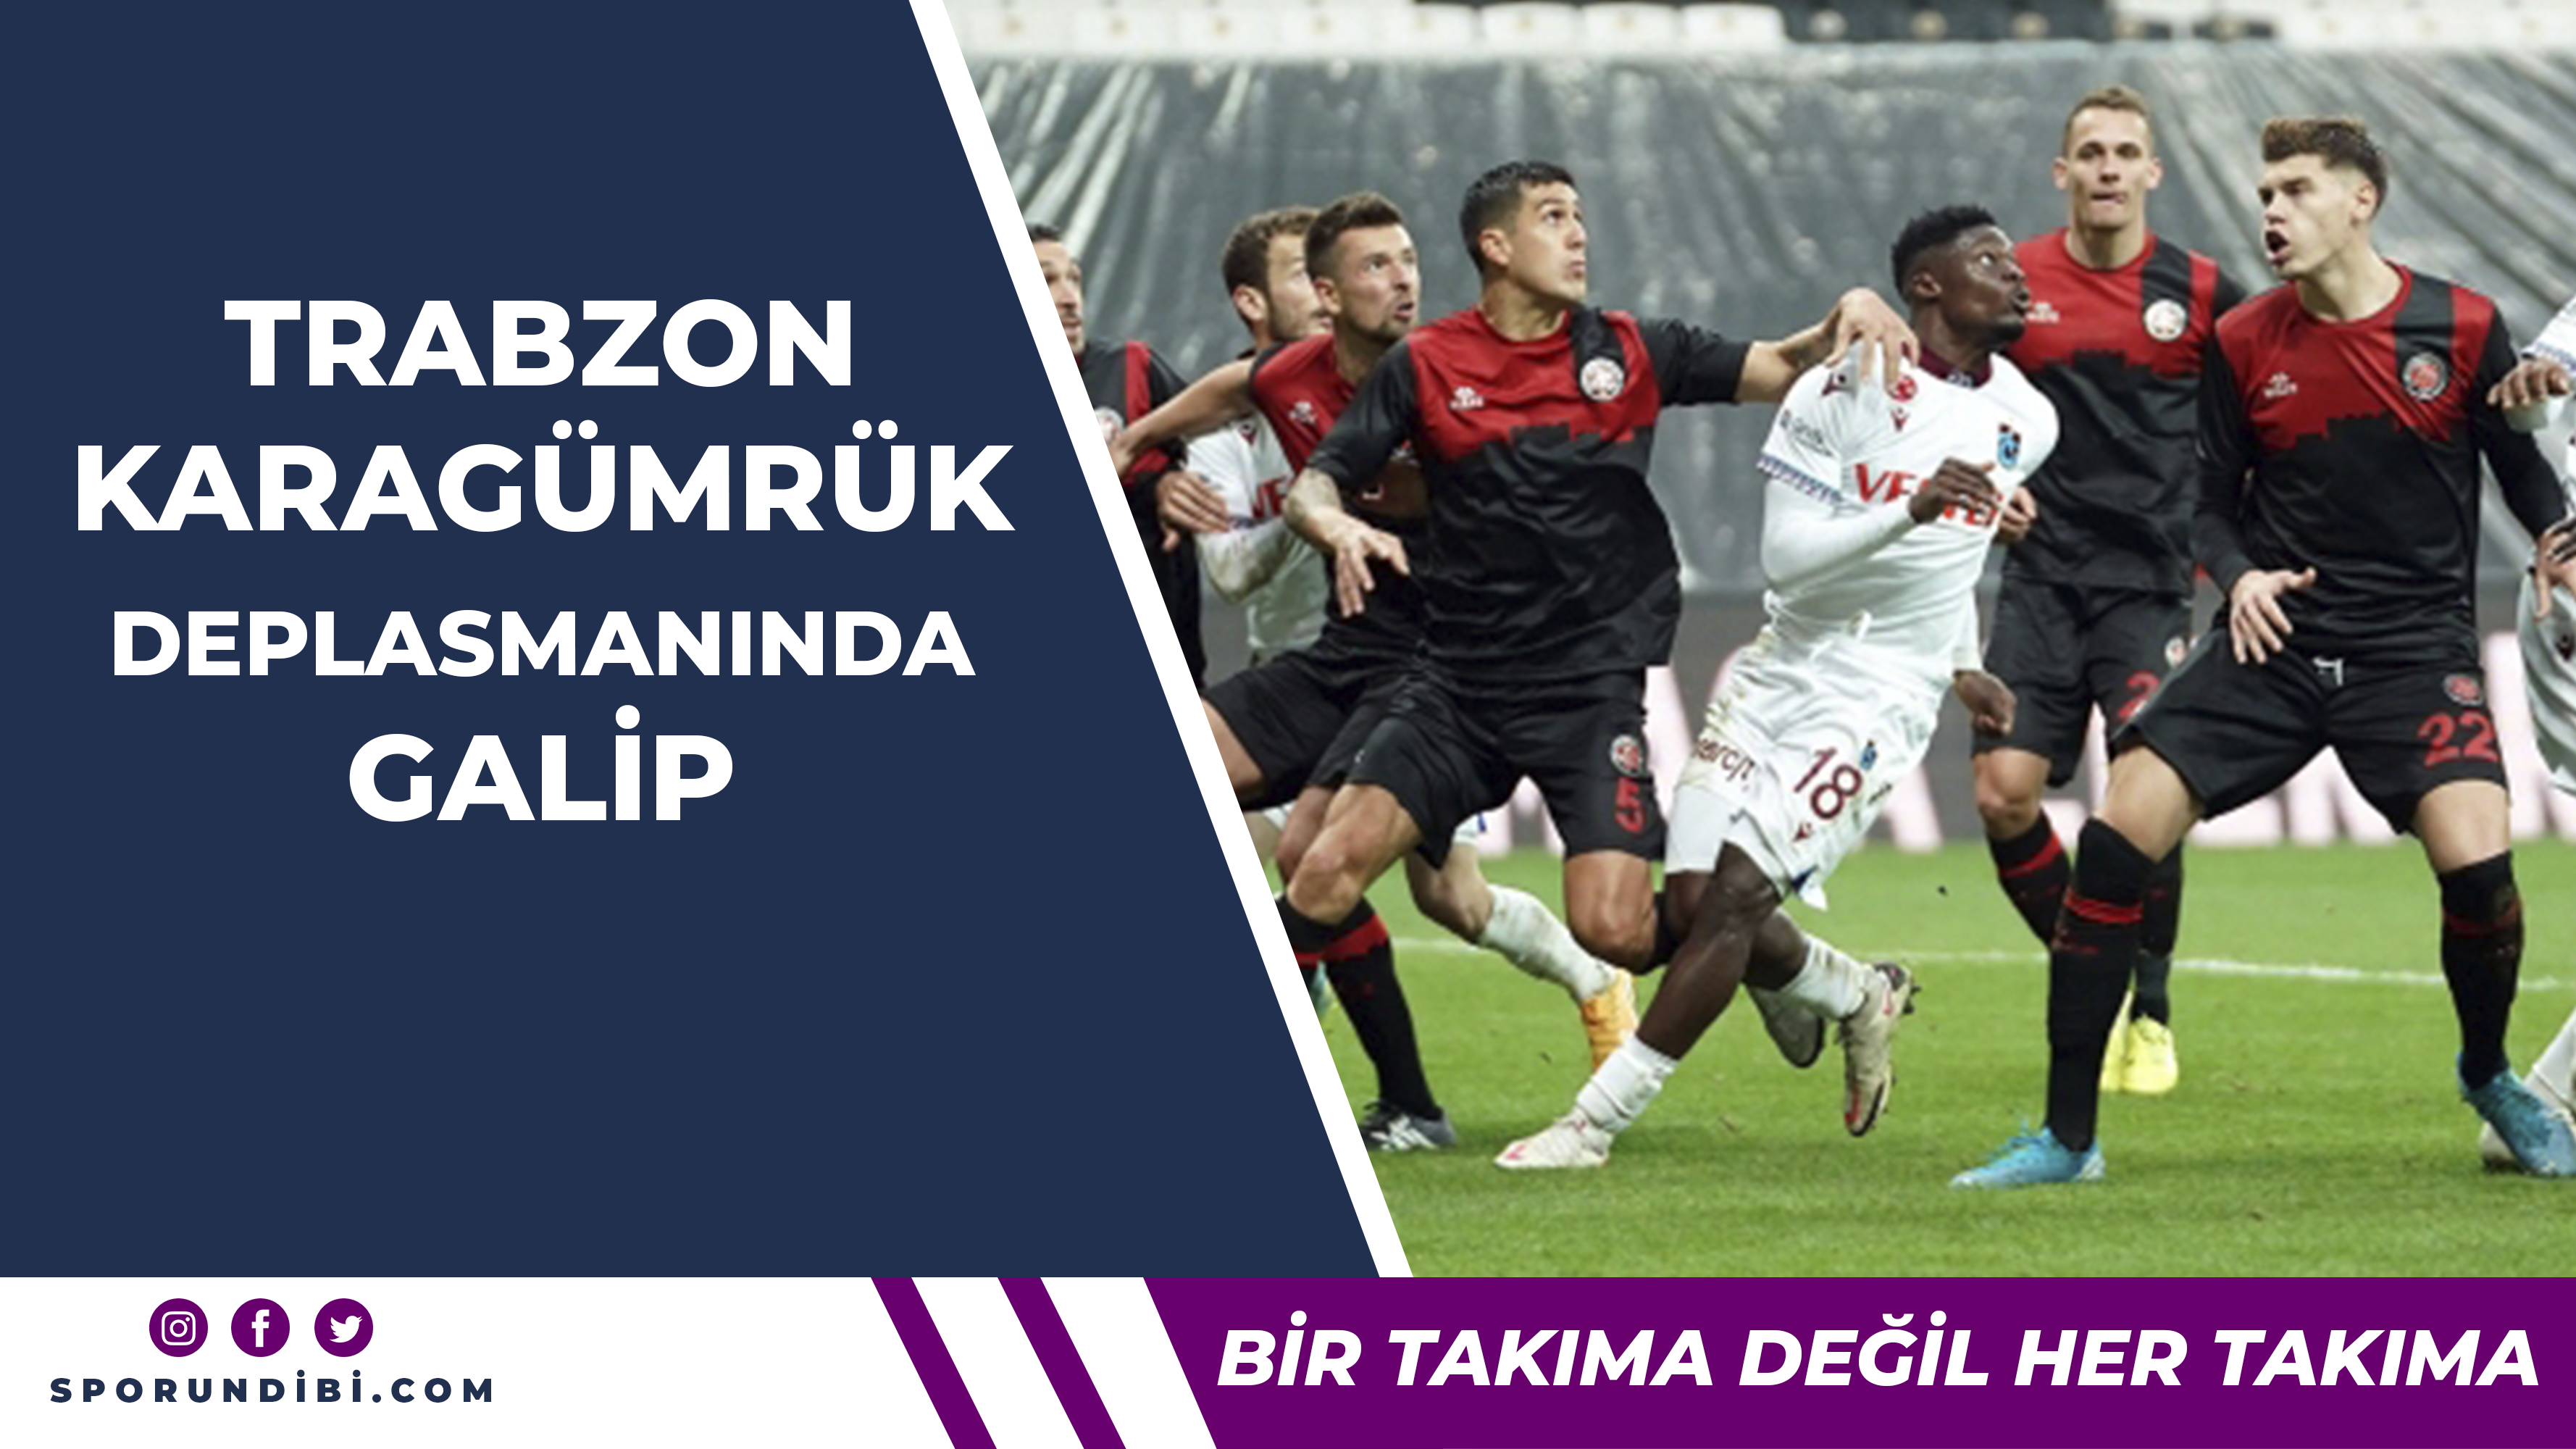 Trabzonspor Karagümrük'ü deplasmanda 2-1 mağlup etti